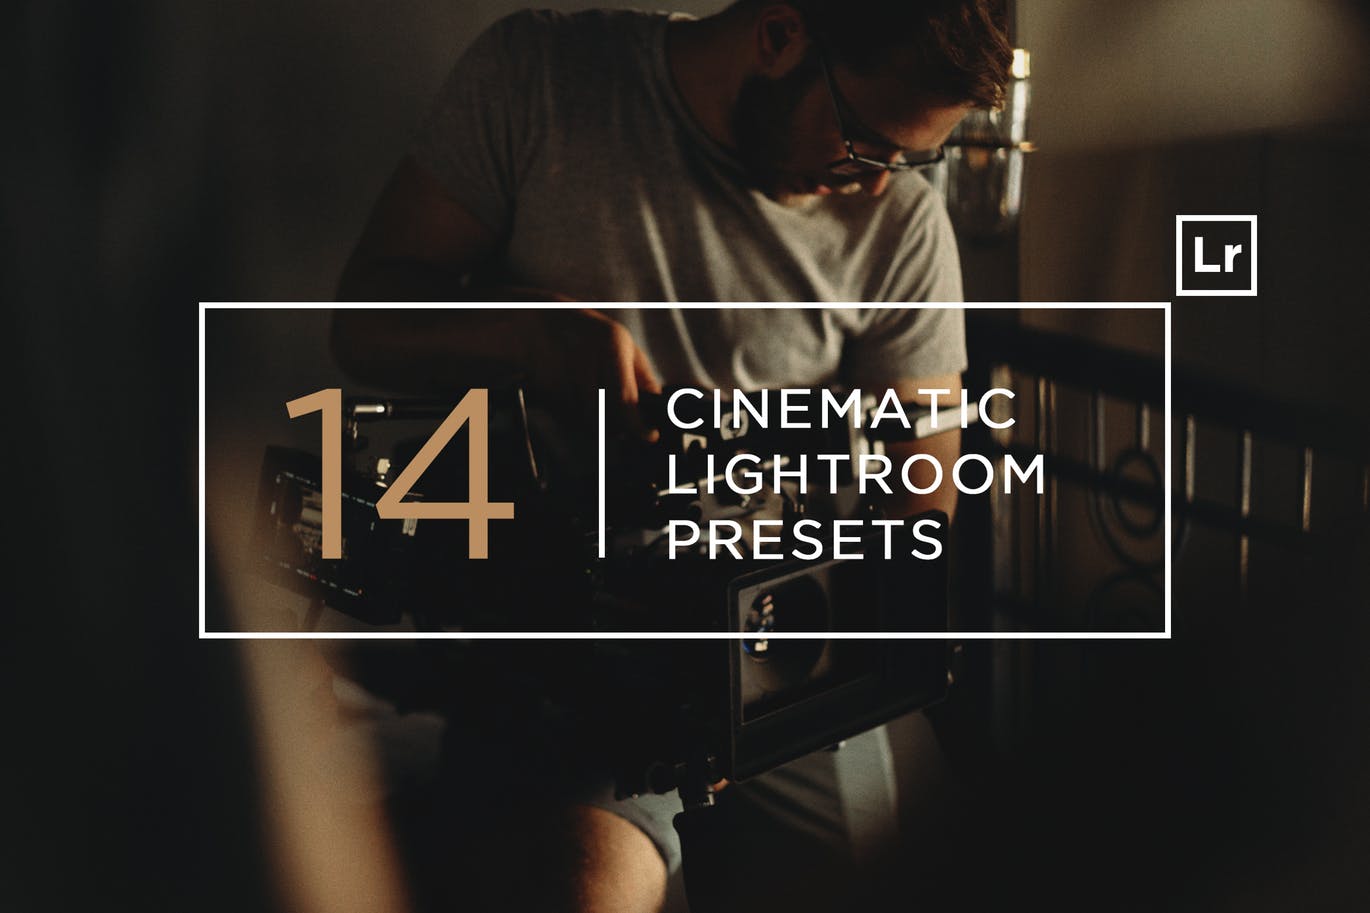 14款电影胶片风格Lightroom调色预设 14 Pro Cinematic Lightroom Presets插图